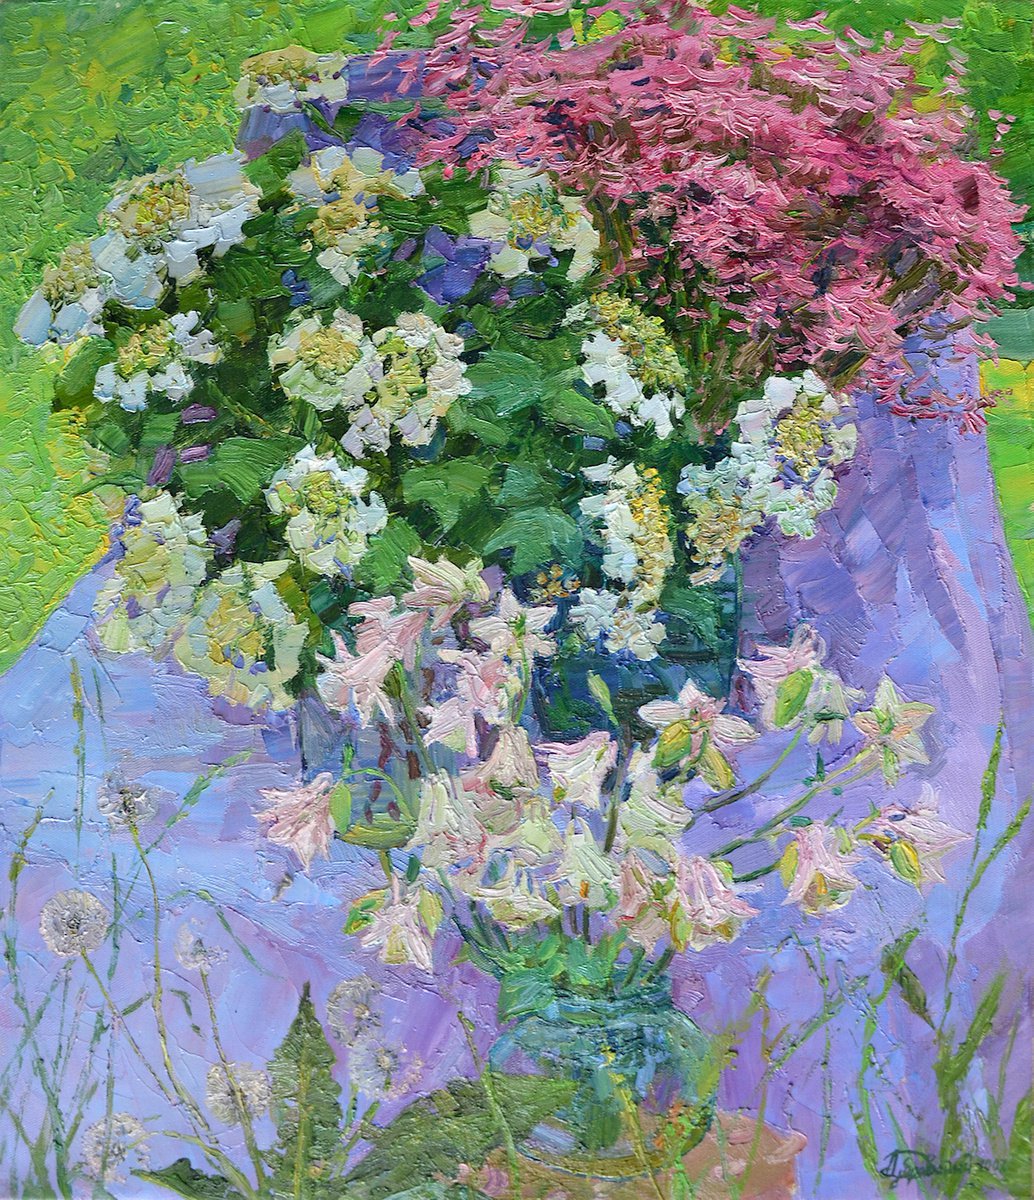 Fragrance of meadow flowers by Aleksandr Dubrovskyy